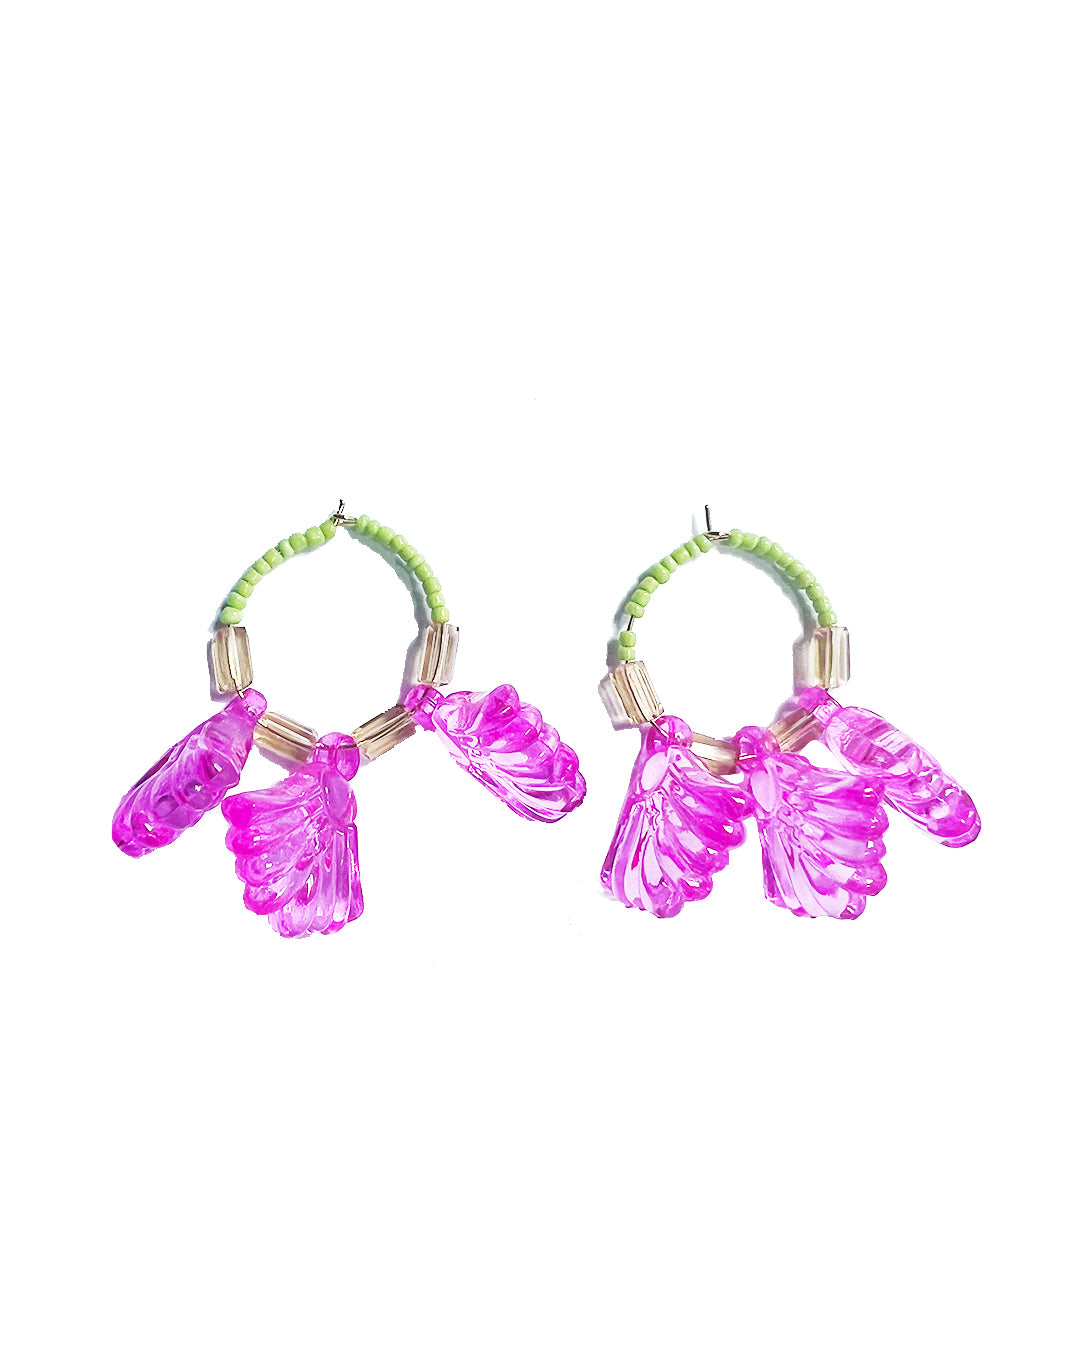 Pink Lime Green Fiesta Earrings  | cukimber designs